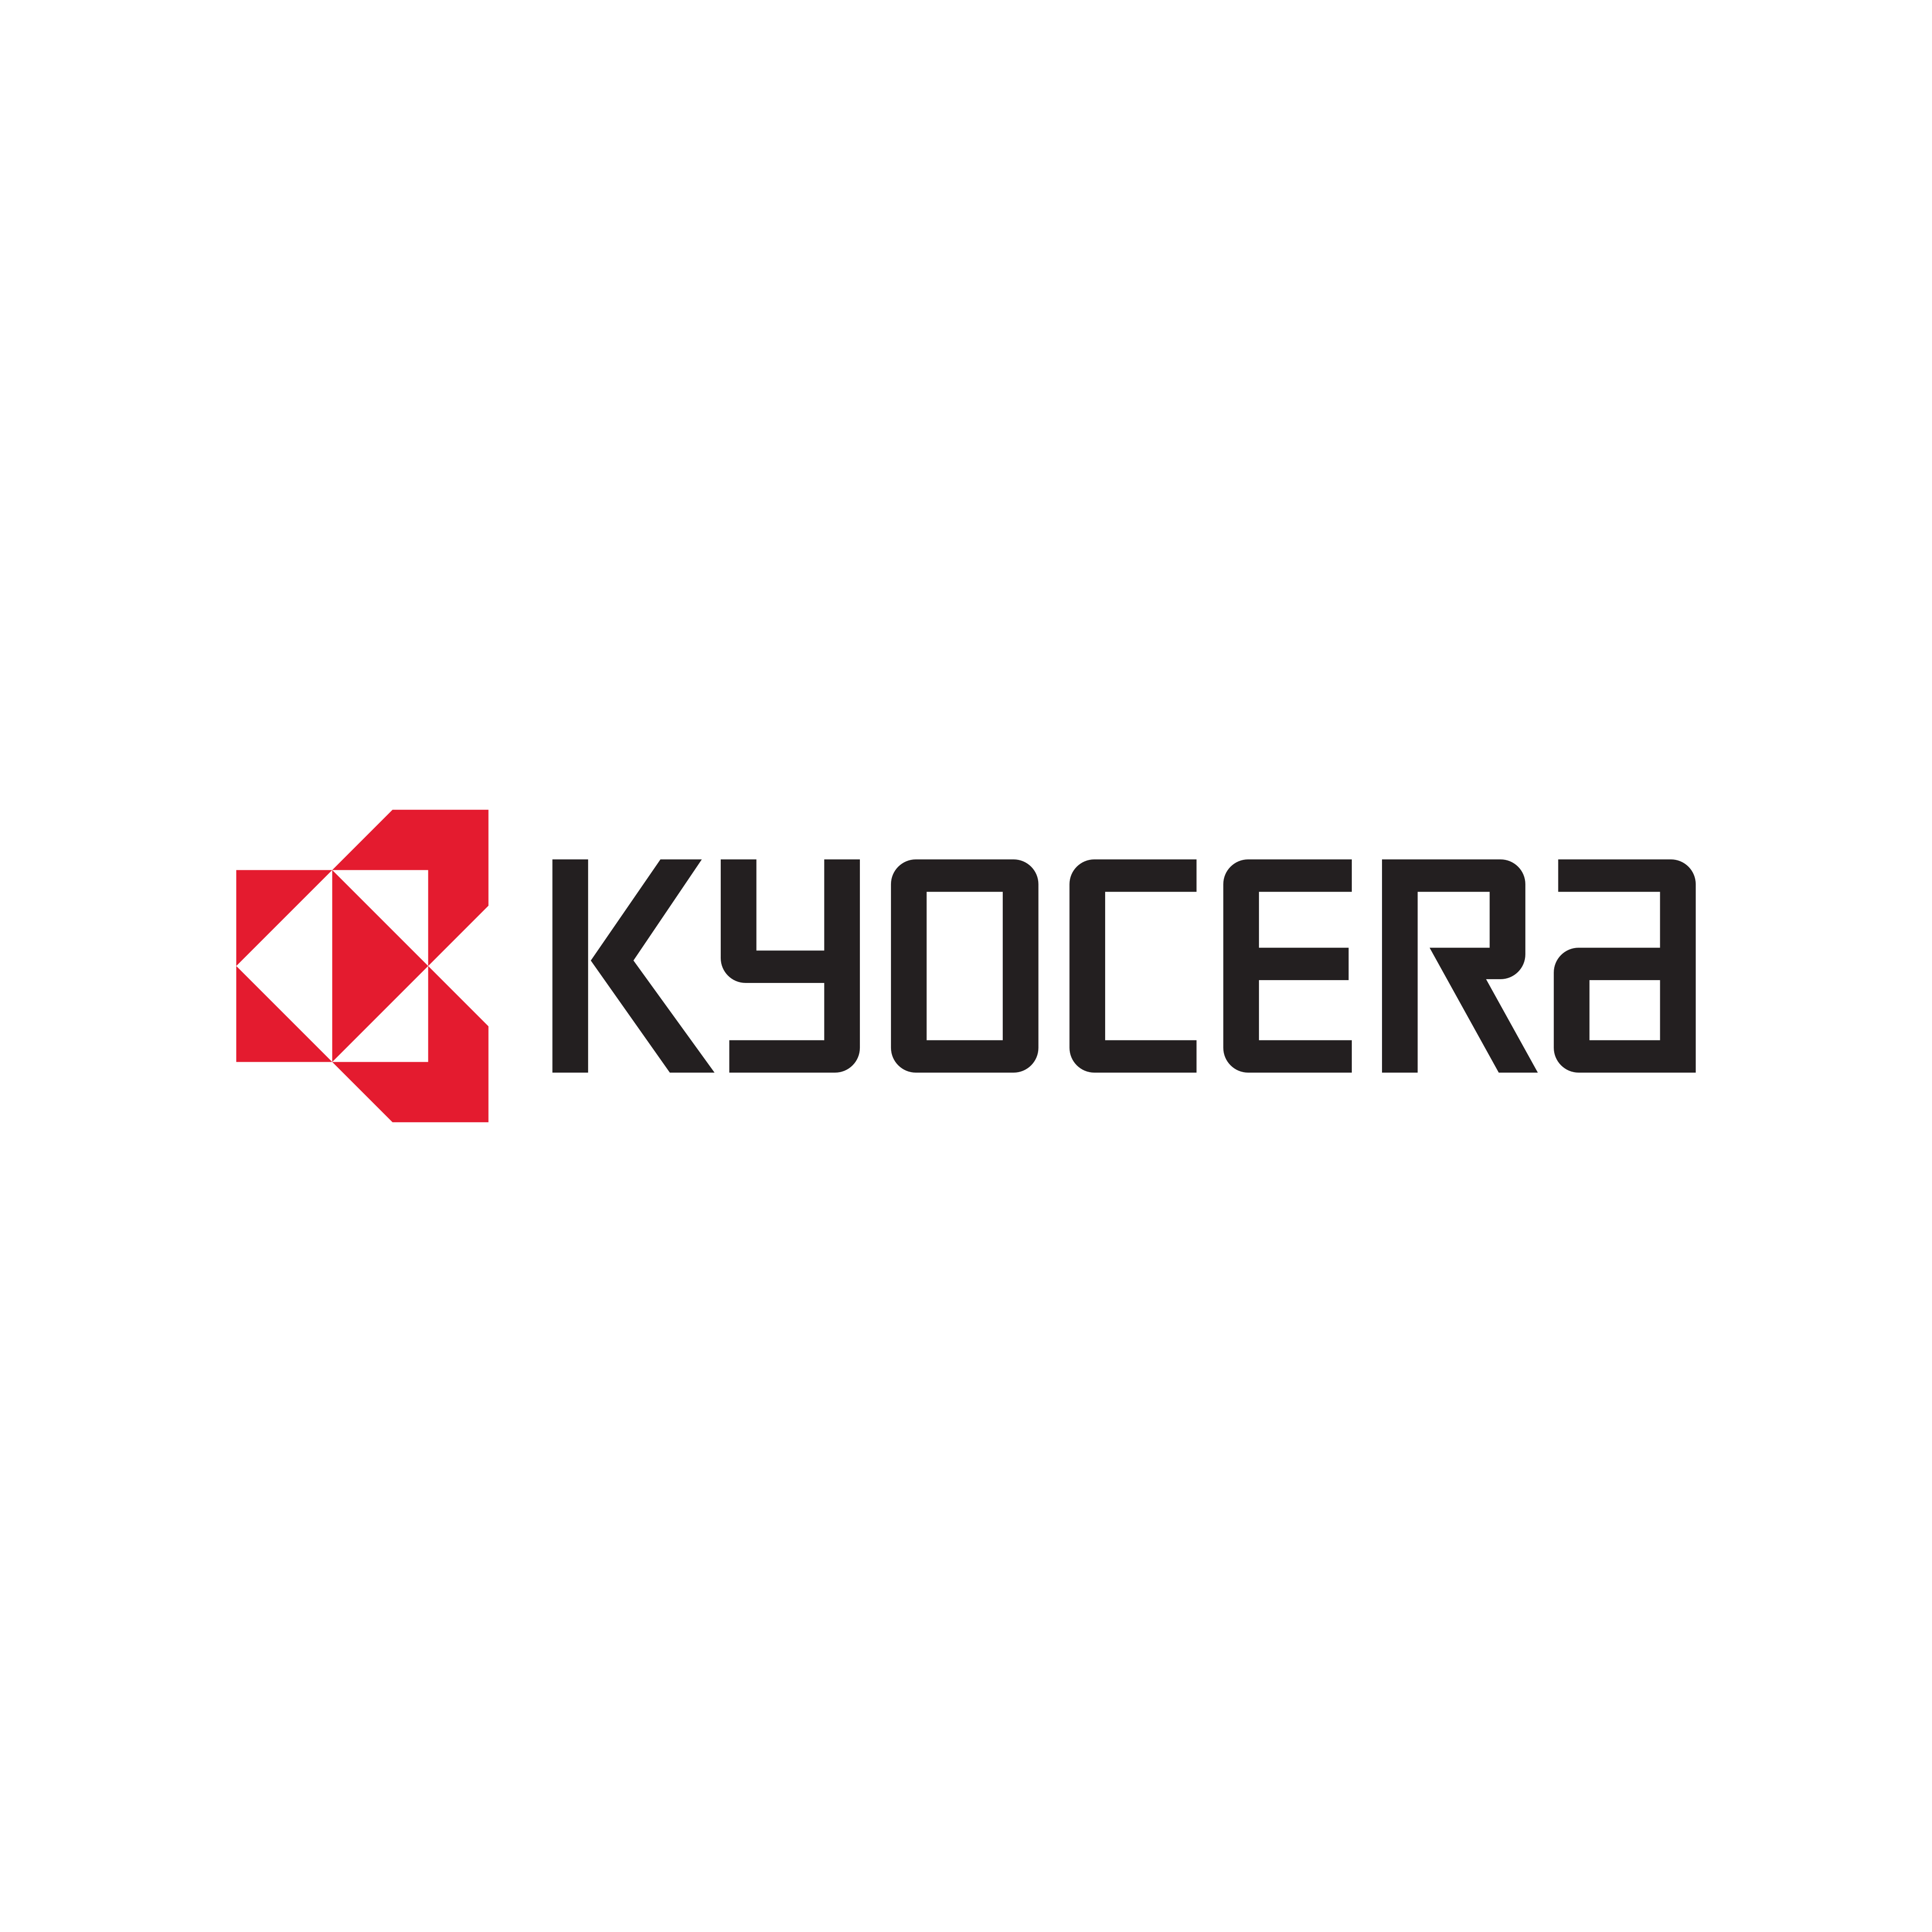 kyocera logo 0 - Kyocera Logo